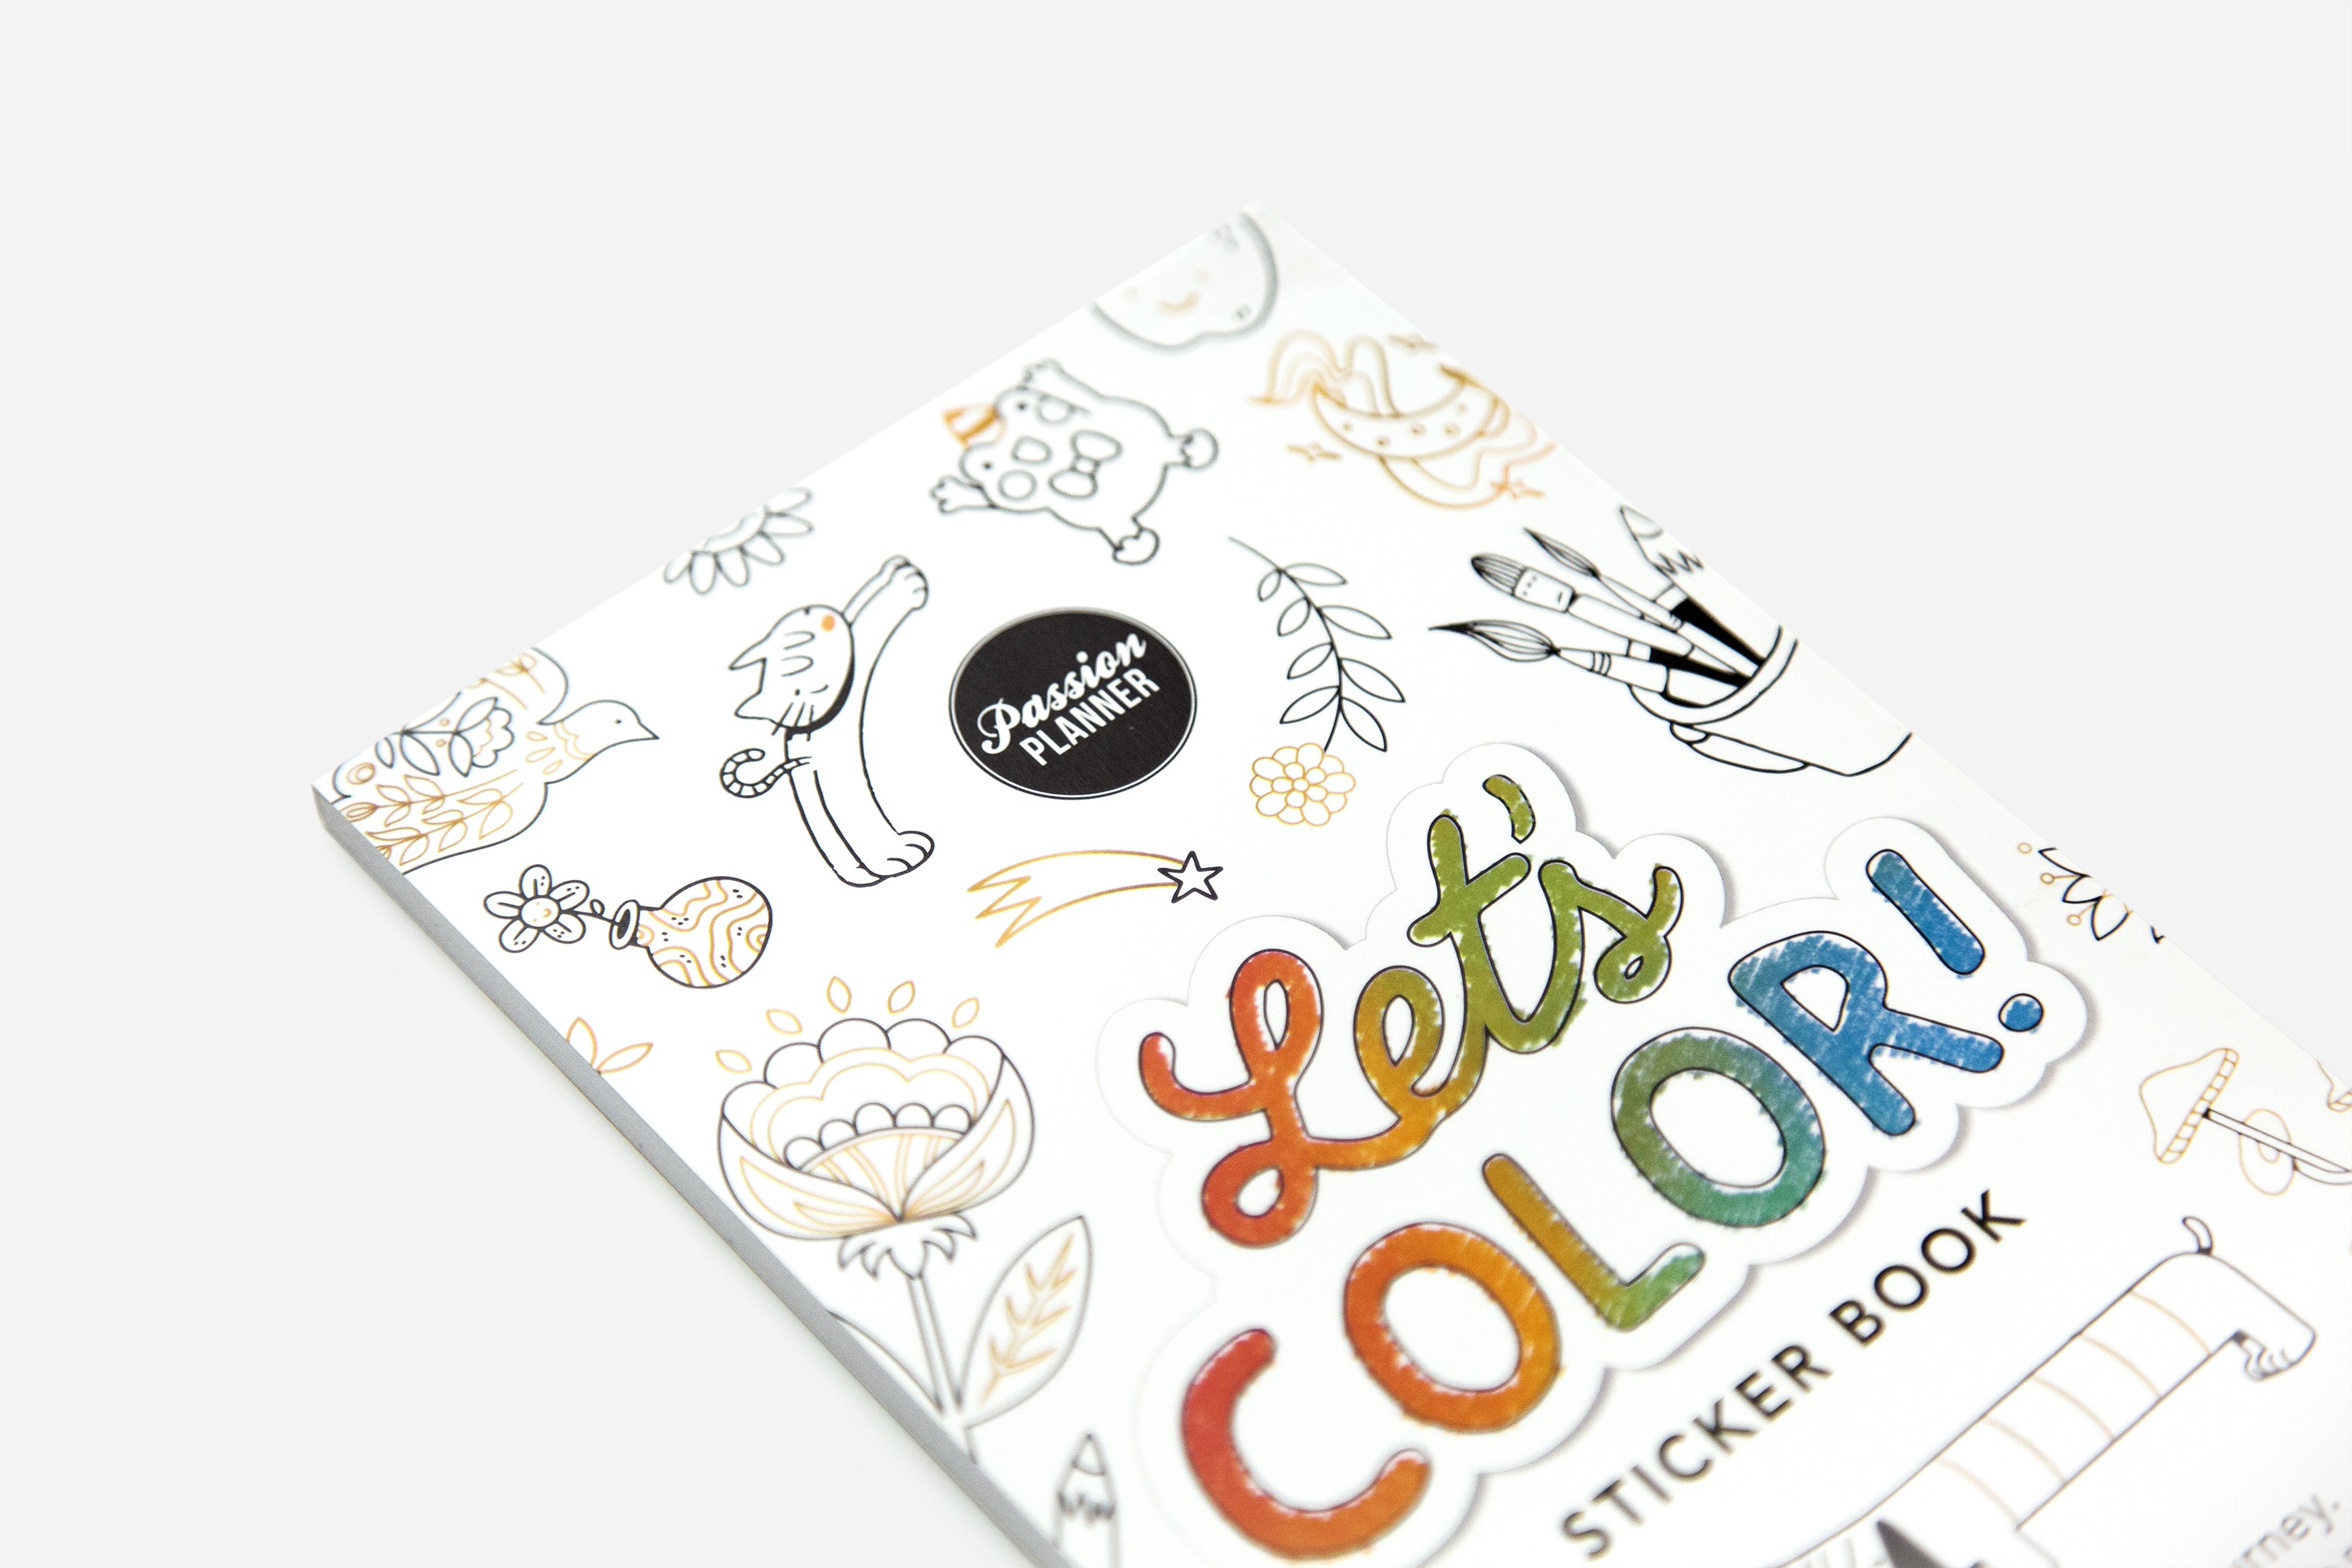 Let's Color! Sticker Book - Passion Planner